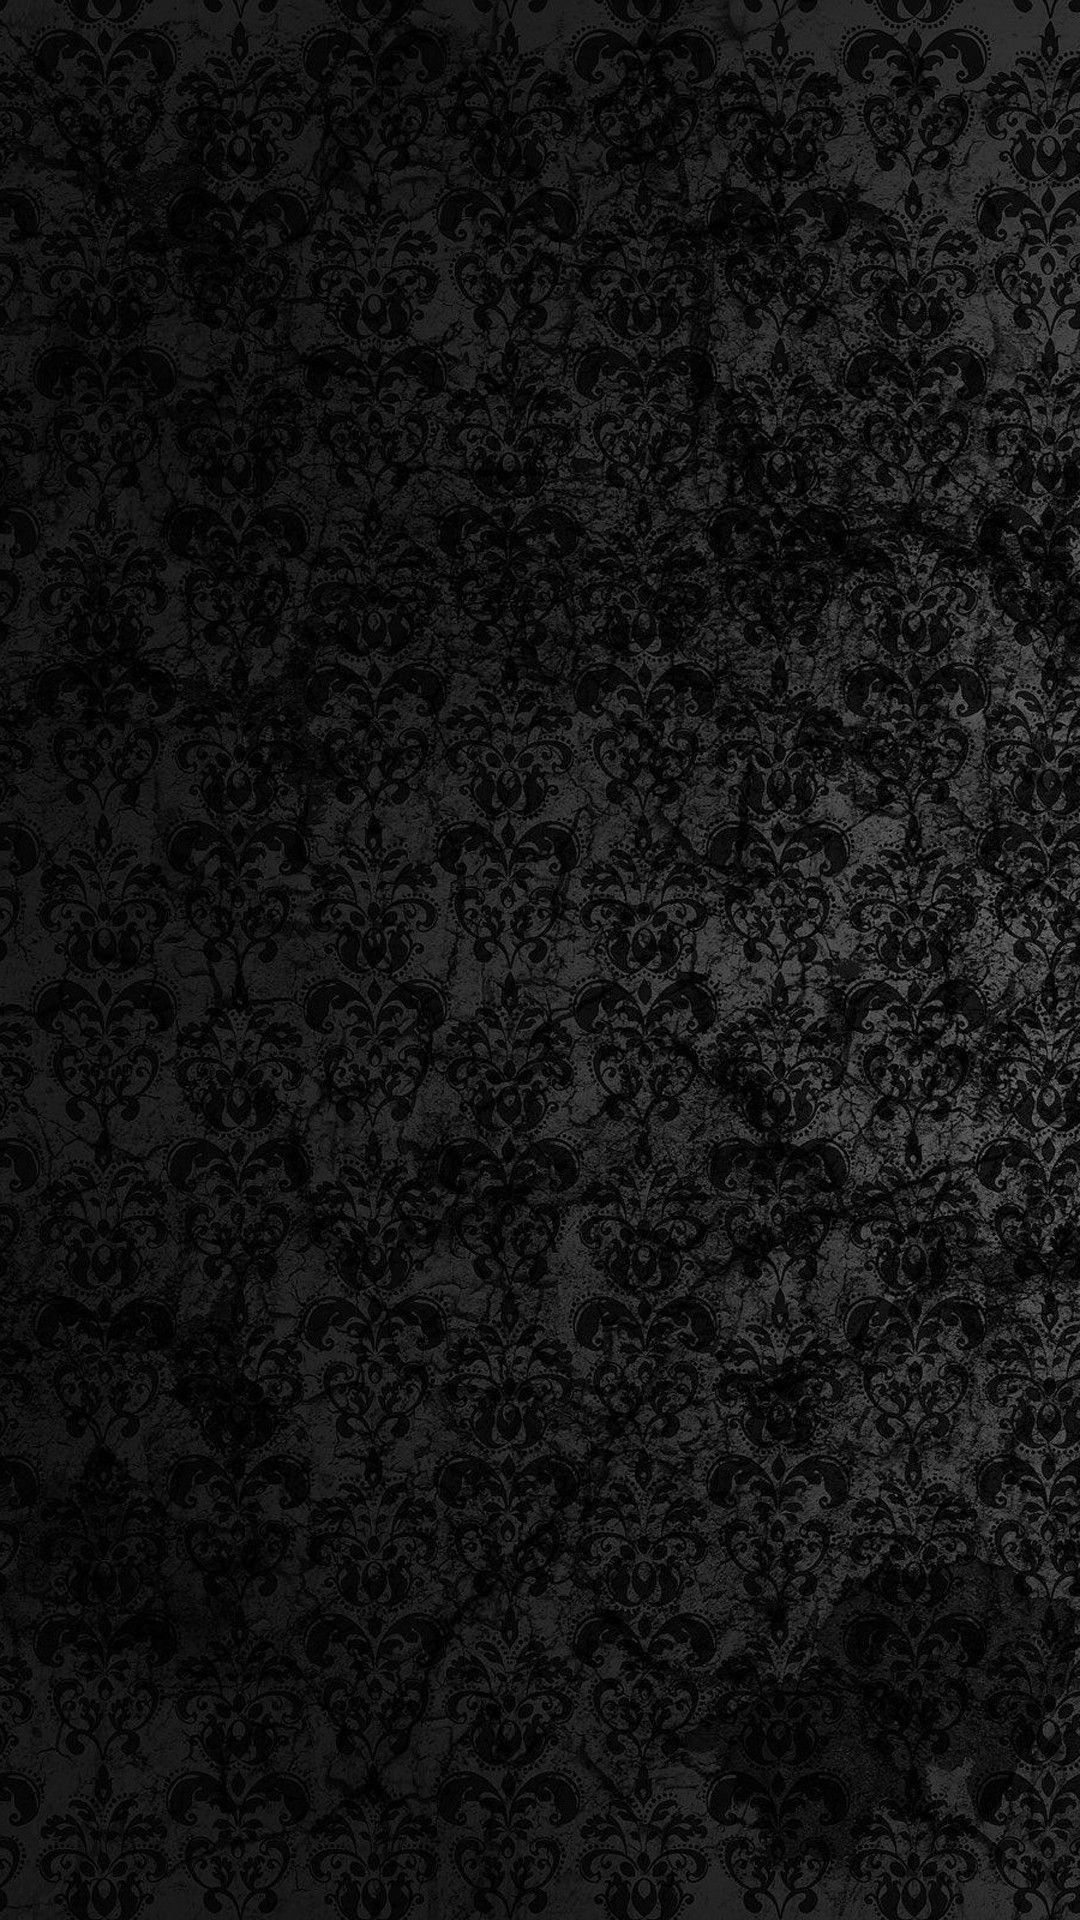 Dark HD Wallpaper For Mobile Phone